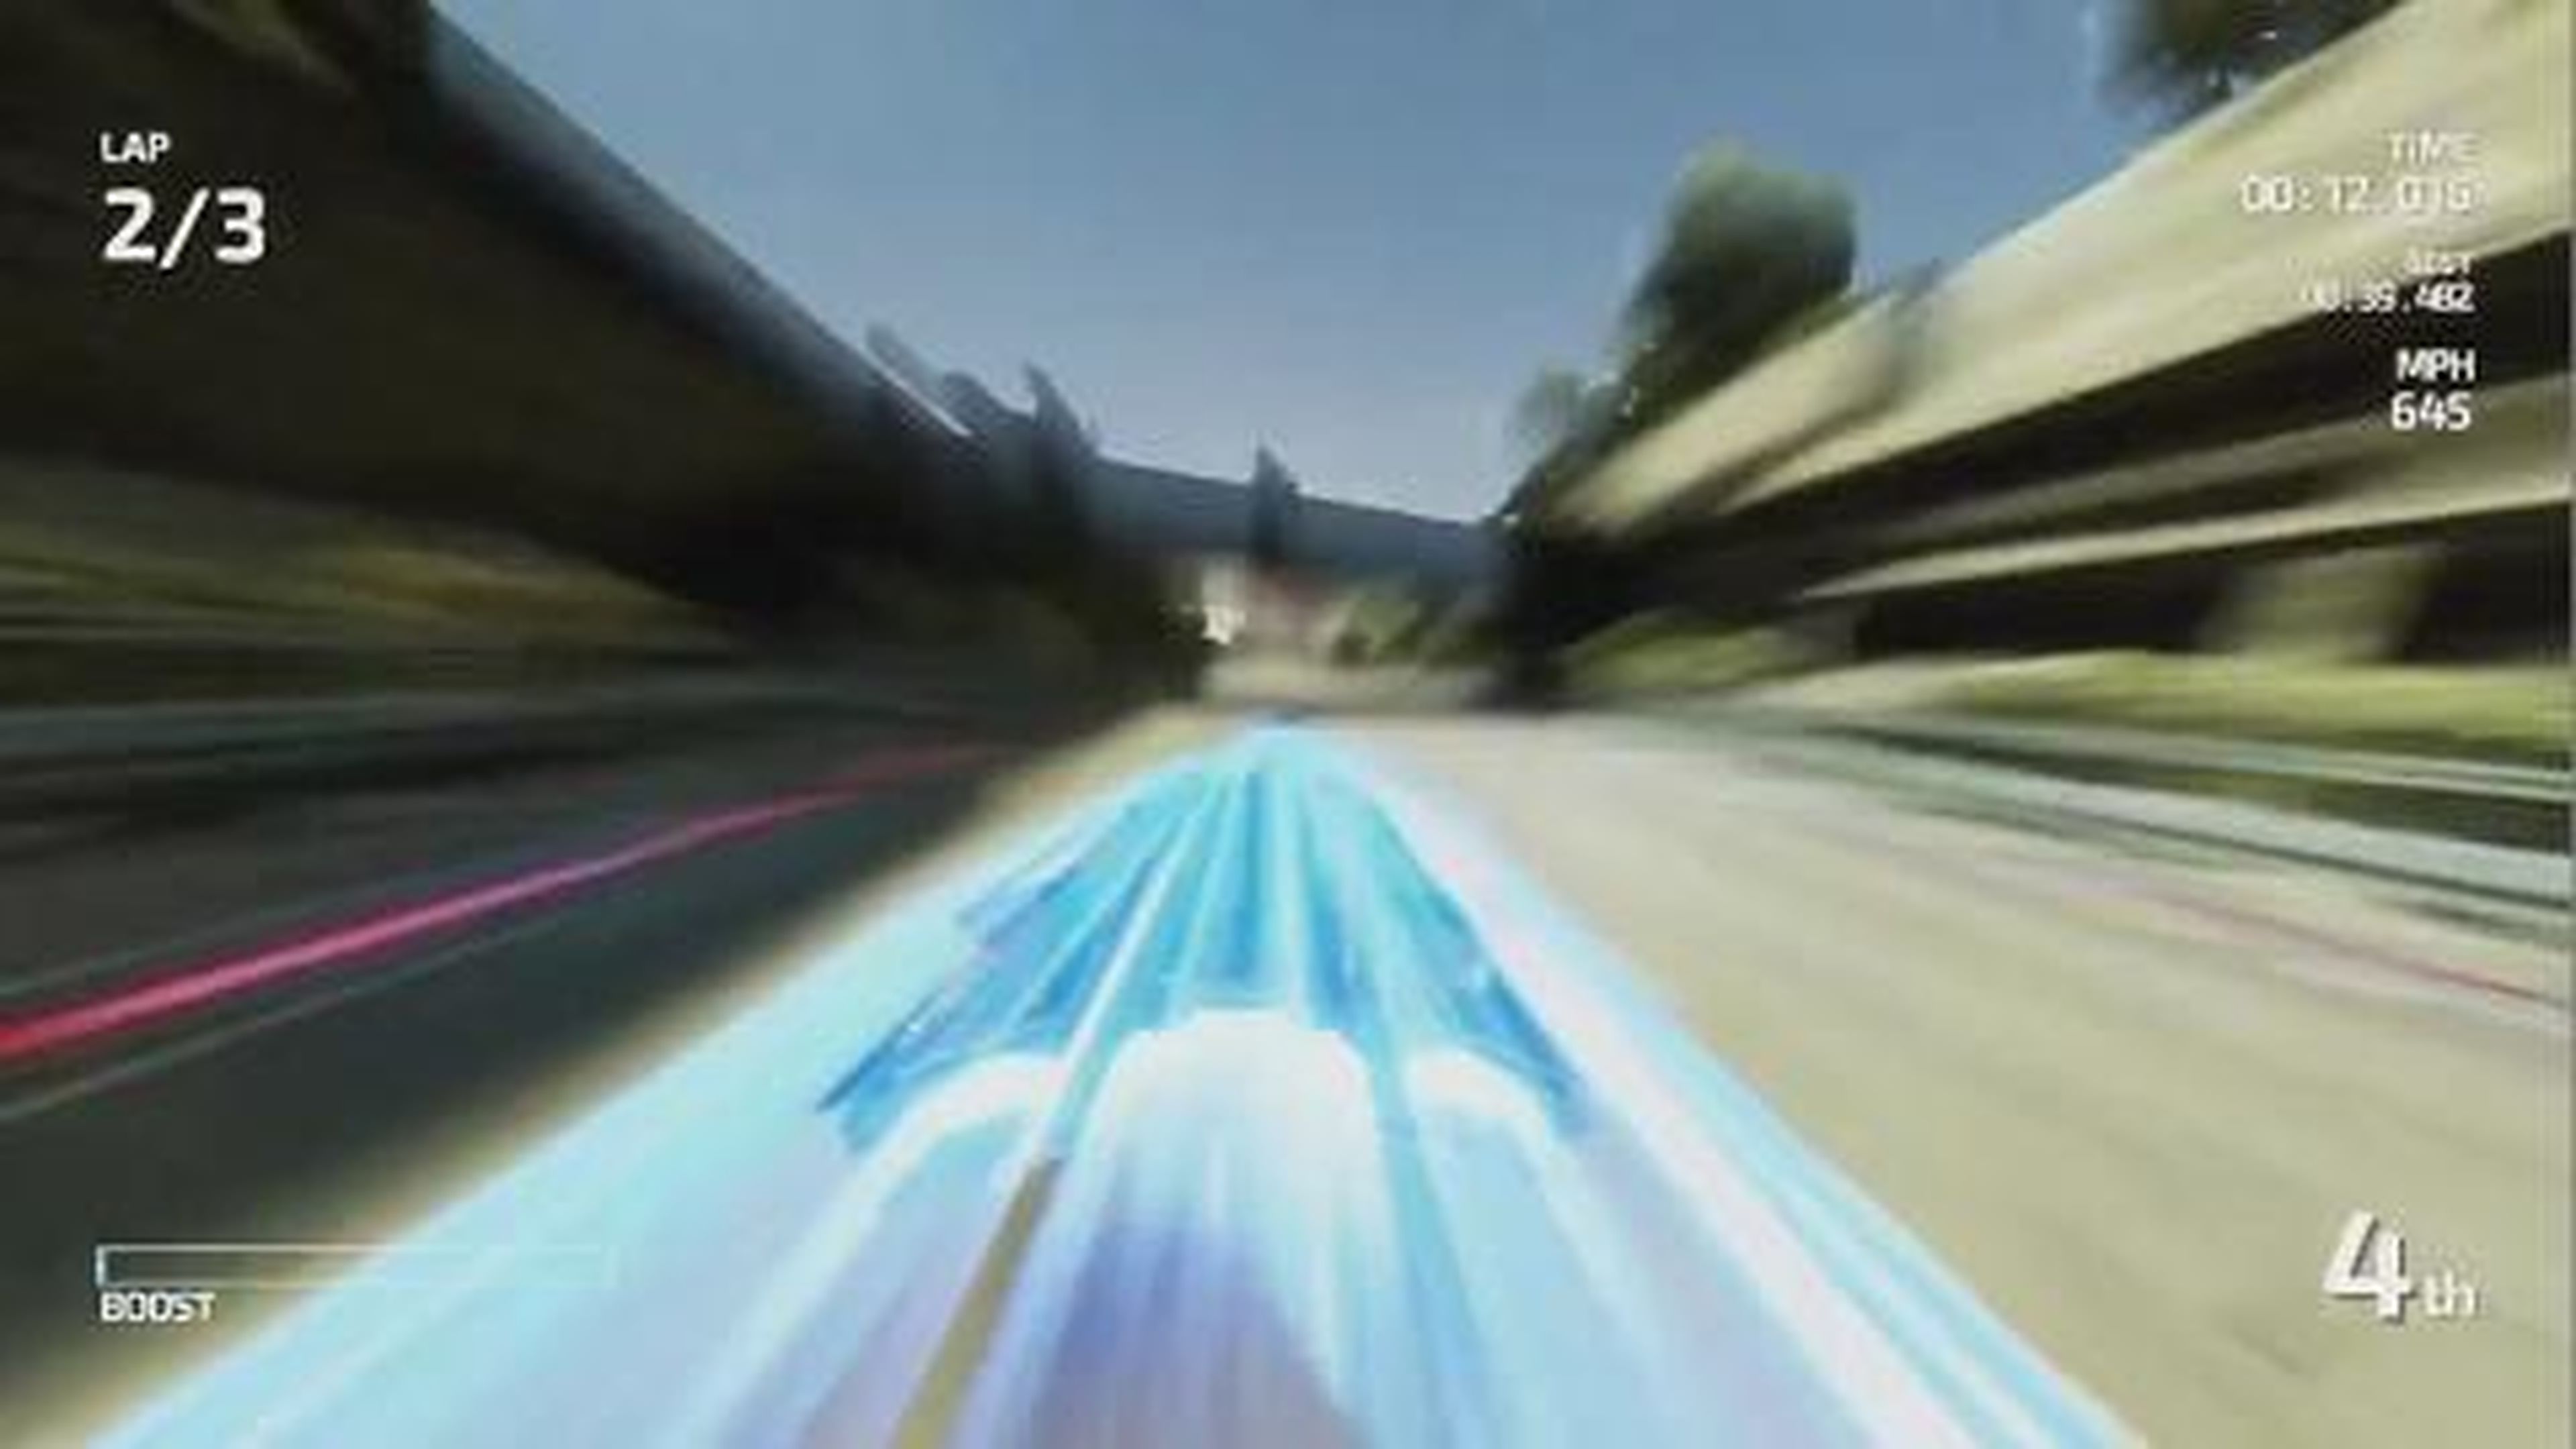 FAST Racing Neo - Imágenes del juego (Wii U) 60FPS